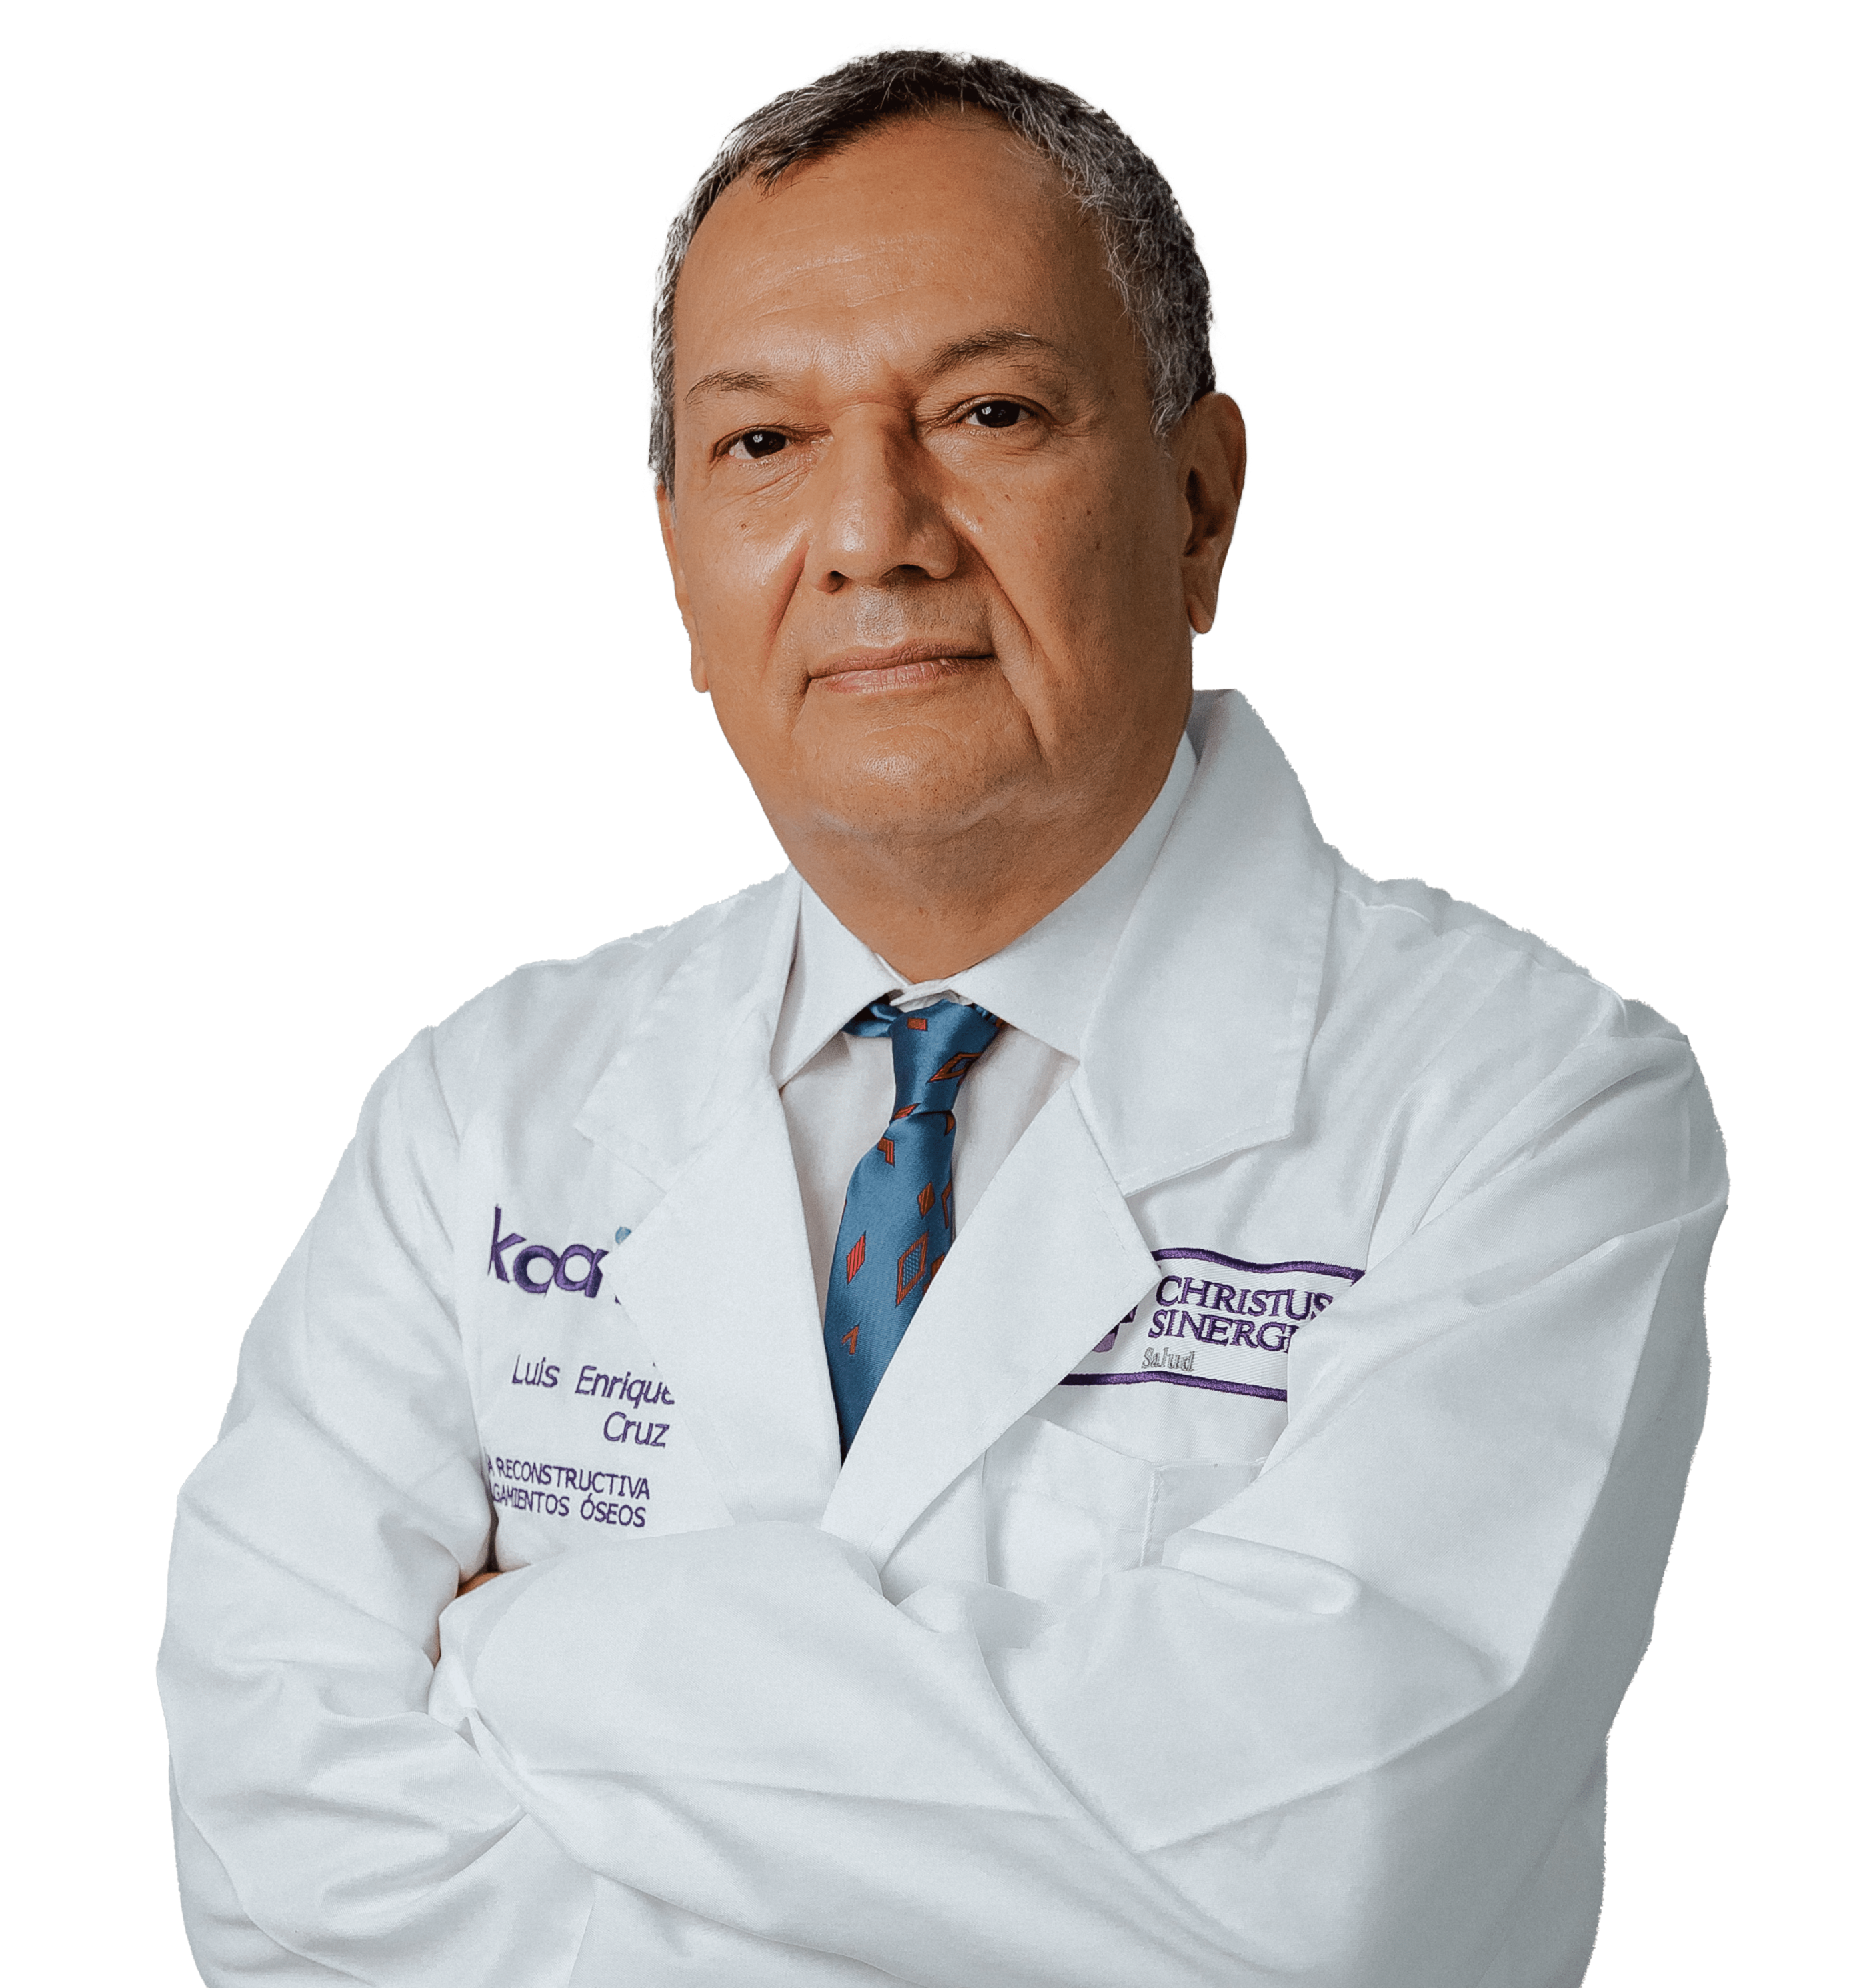 Luis Enrique Cruz ortopedia Katama